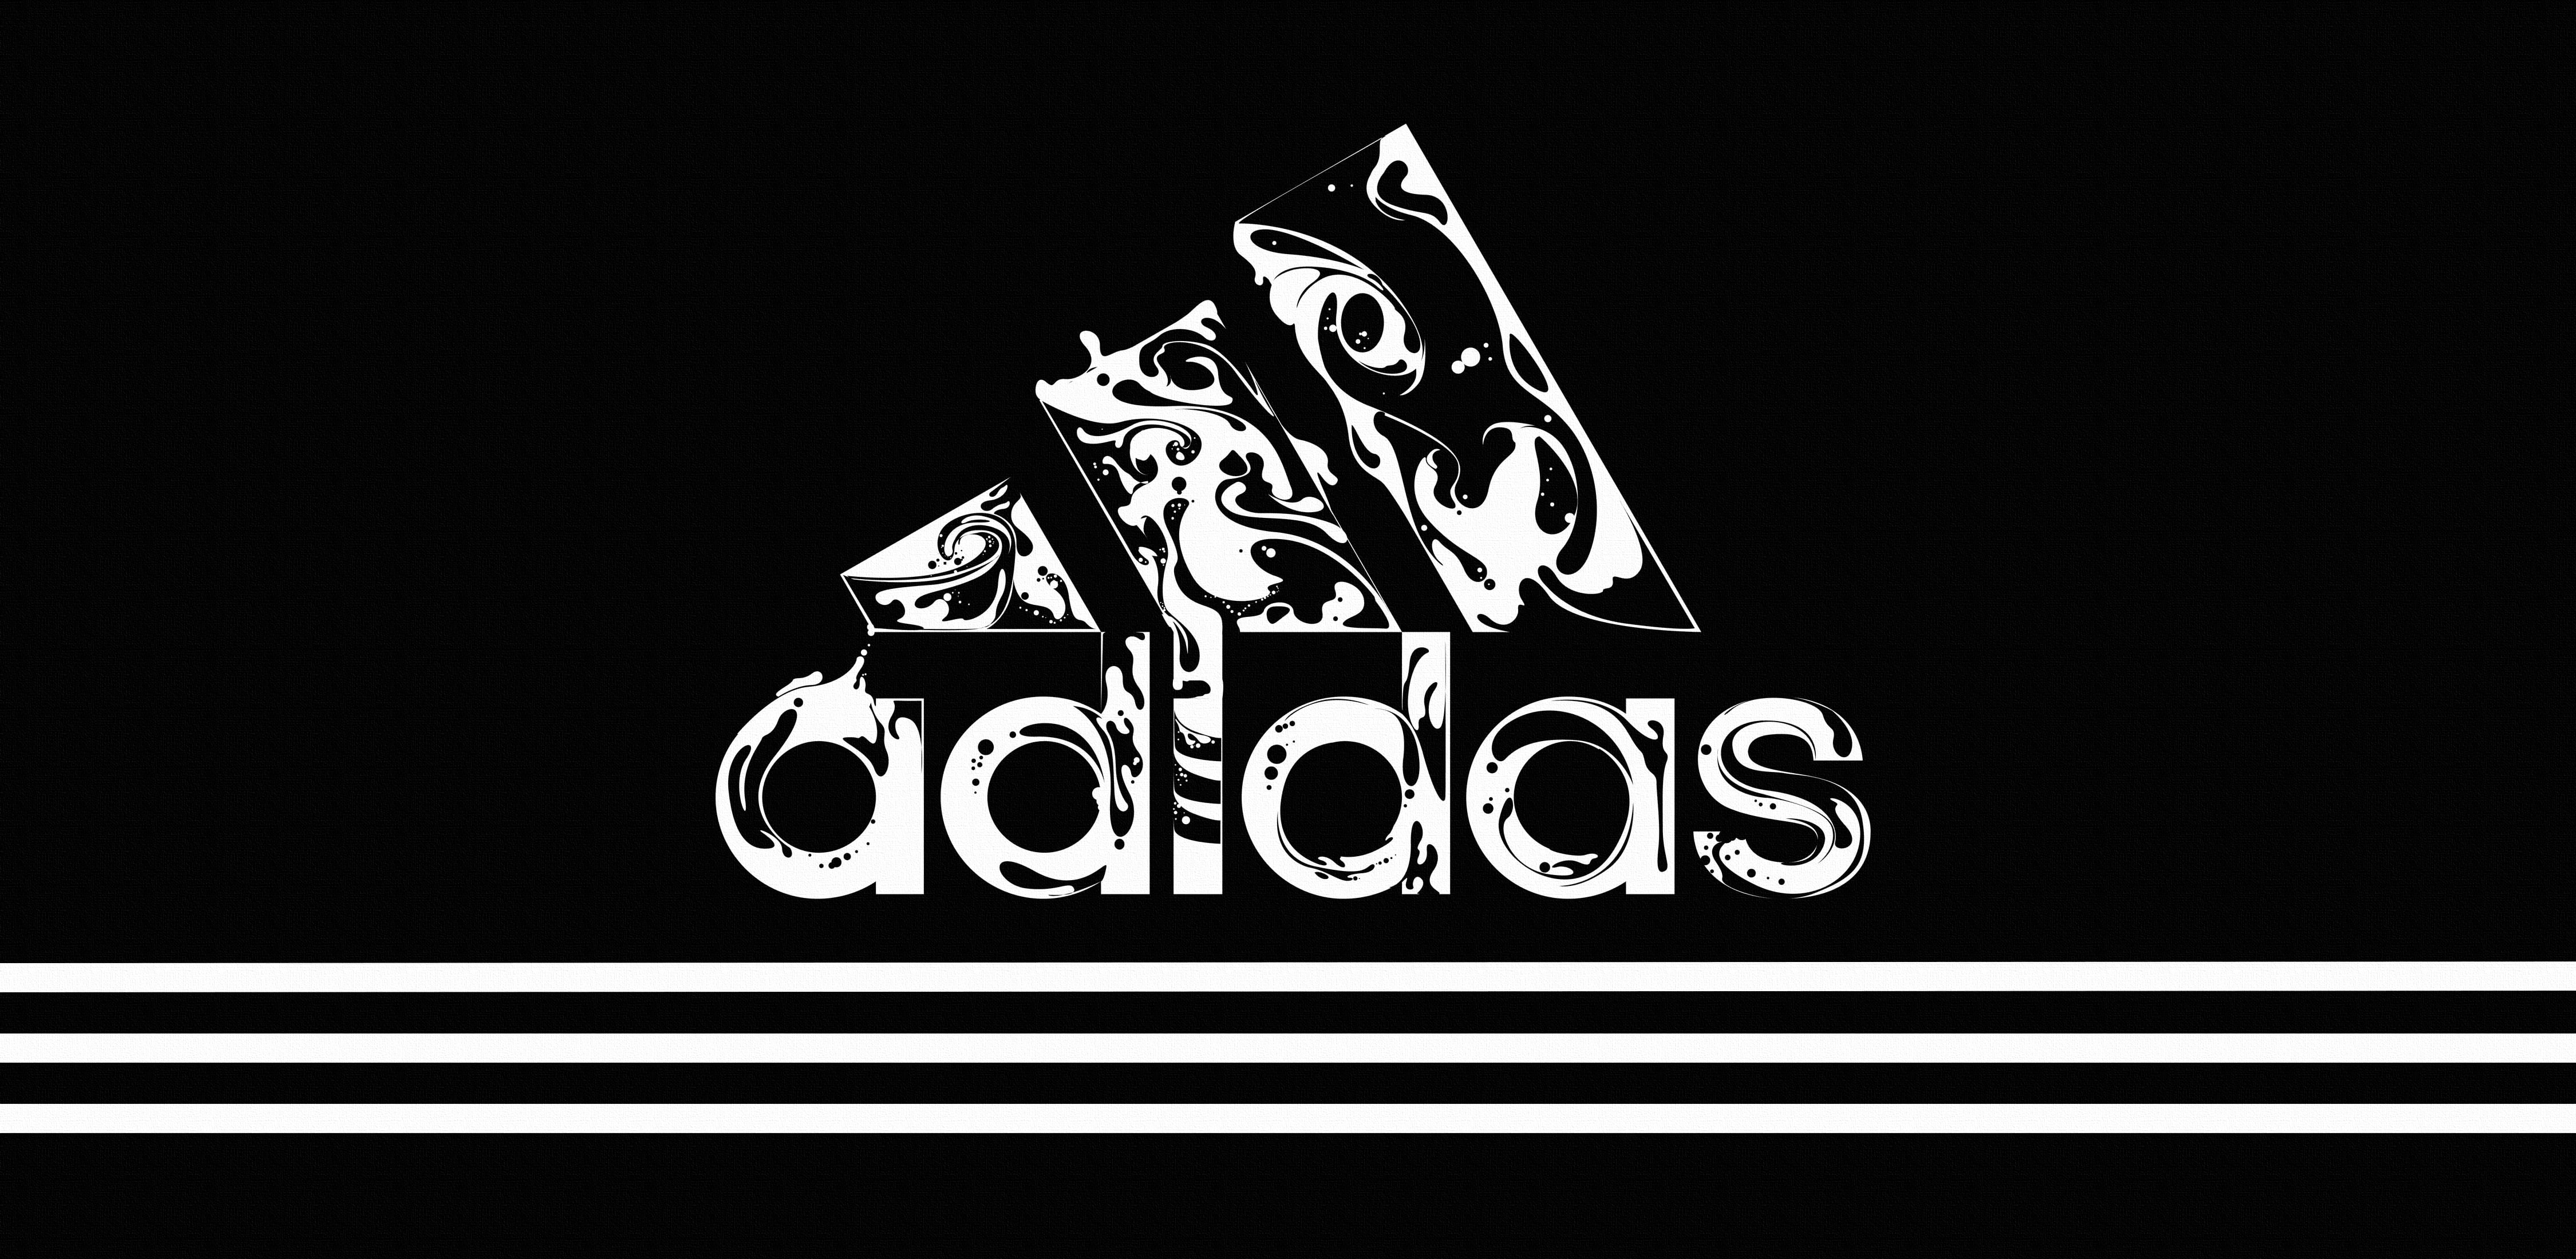 adidas logo, Black, Strip, Style, Background, illustration, sign